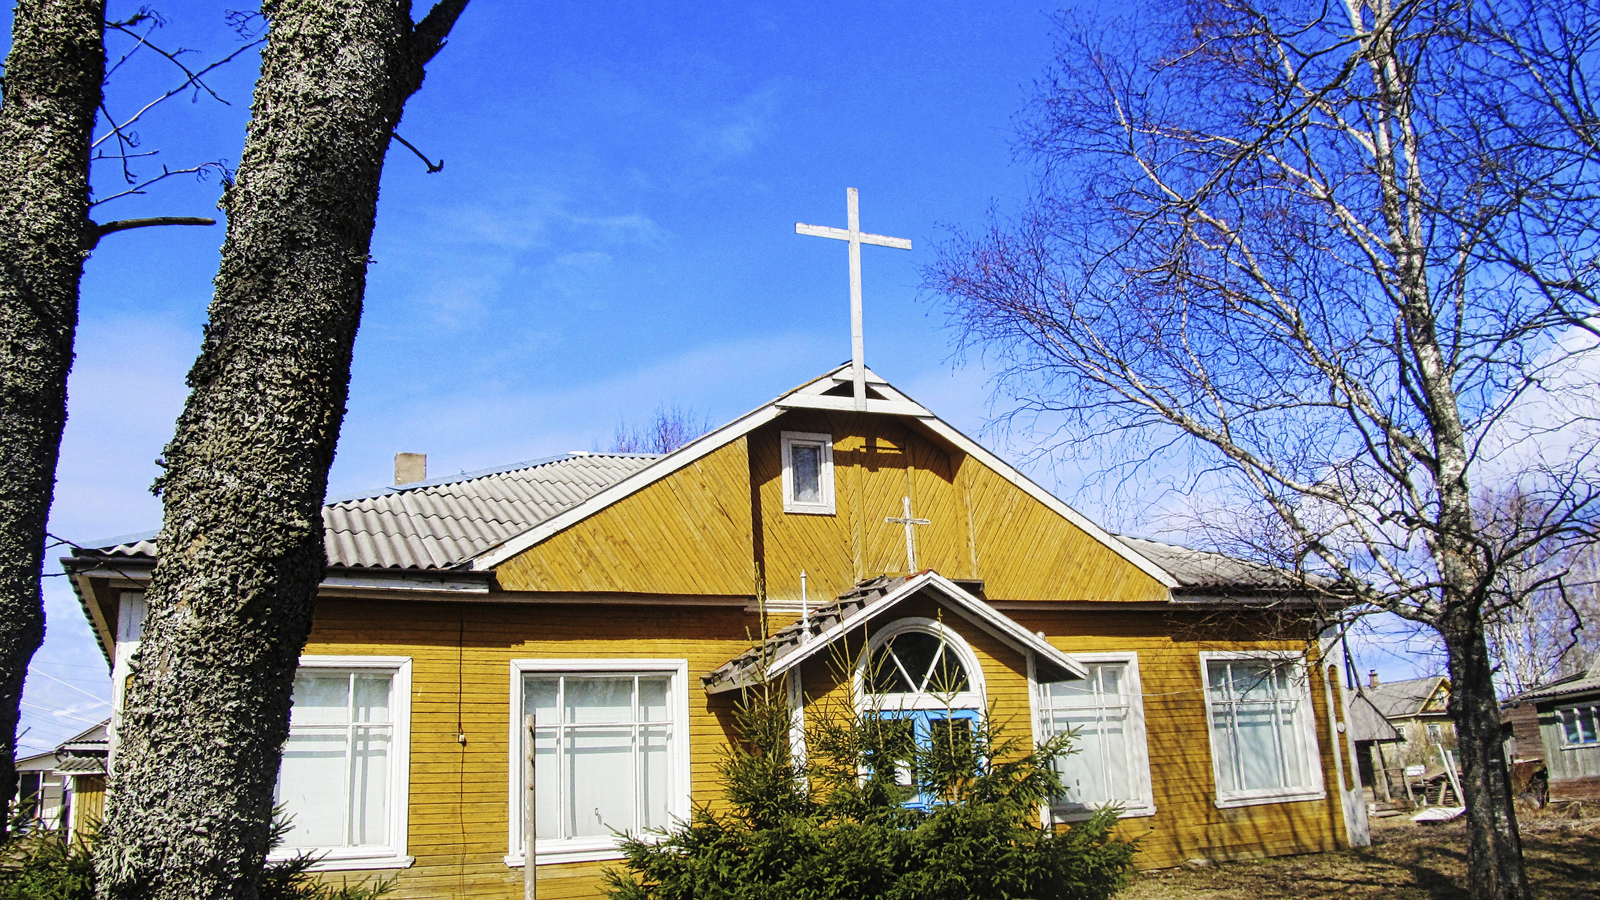 May 1, 2022. The Chapel church in Vidlitsa